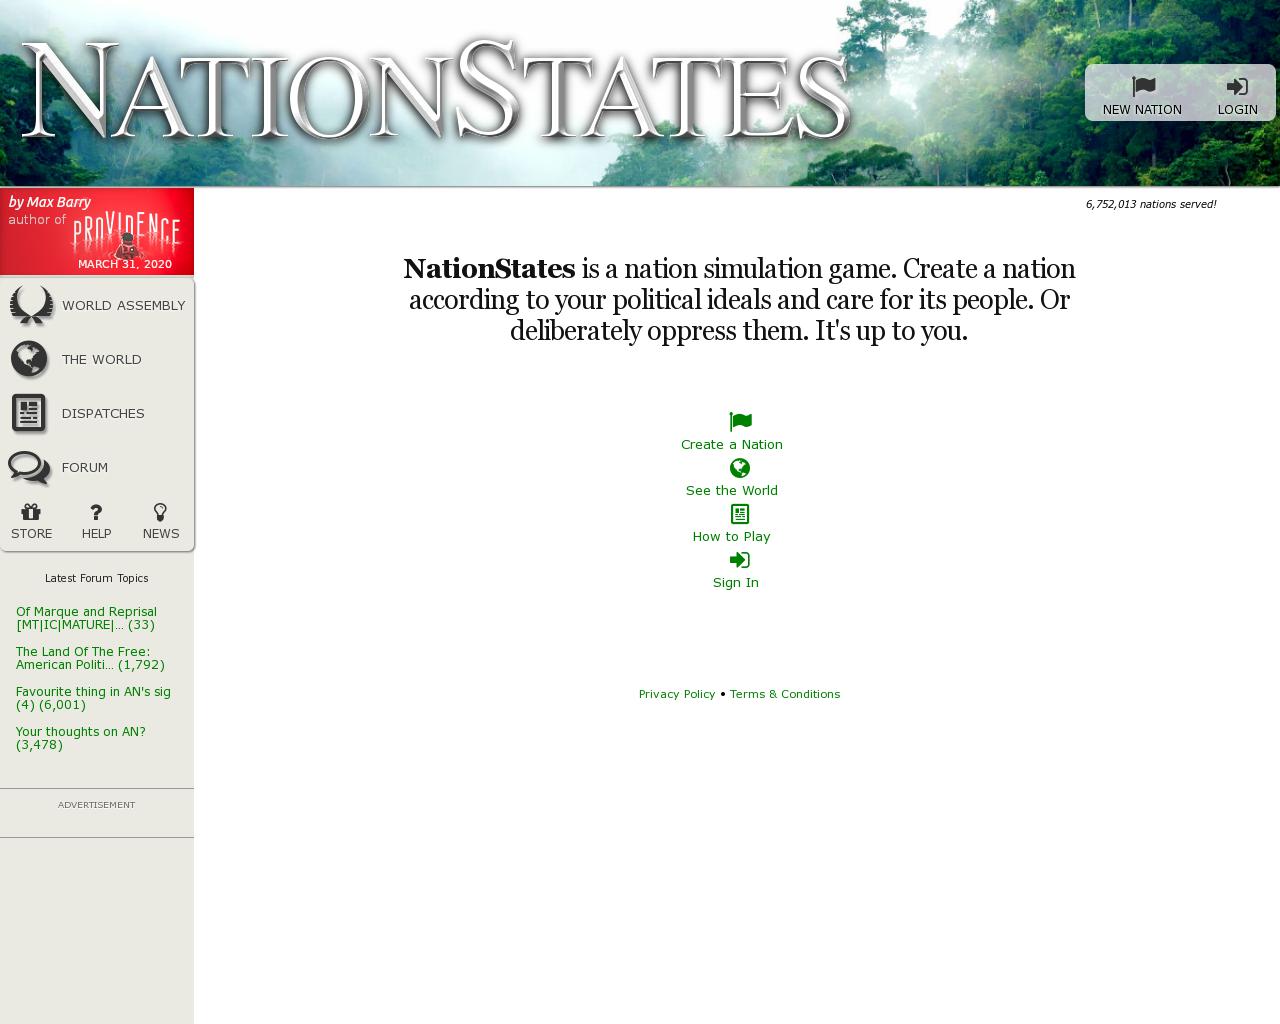 nationstates.net